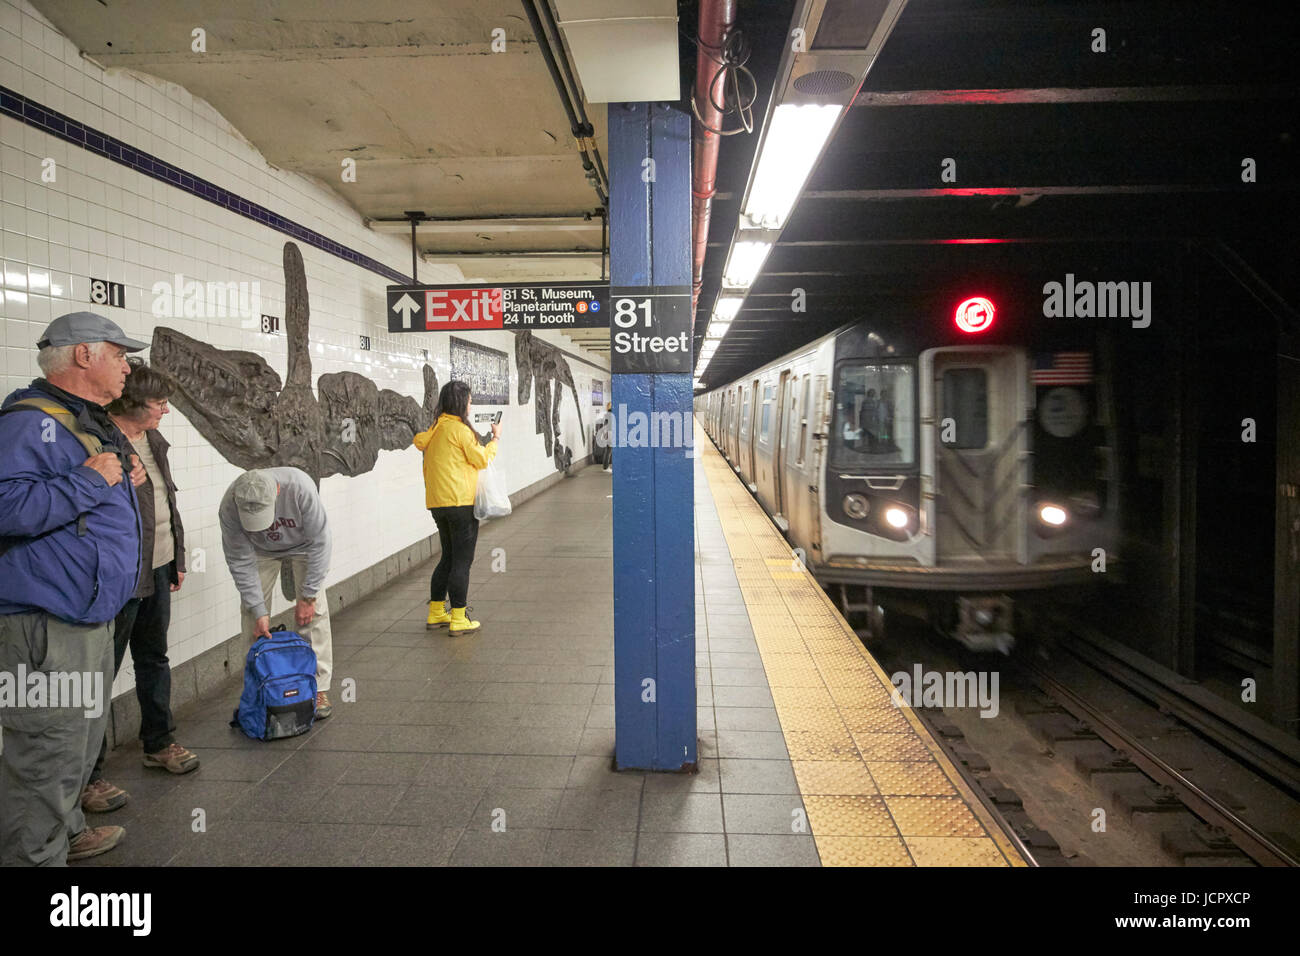 c line train approaching 81 street subway station platform New York City USA Stock Photo